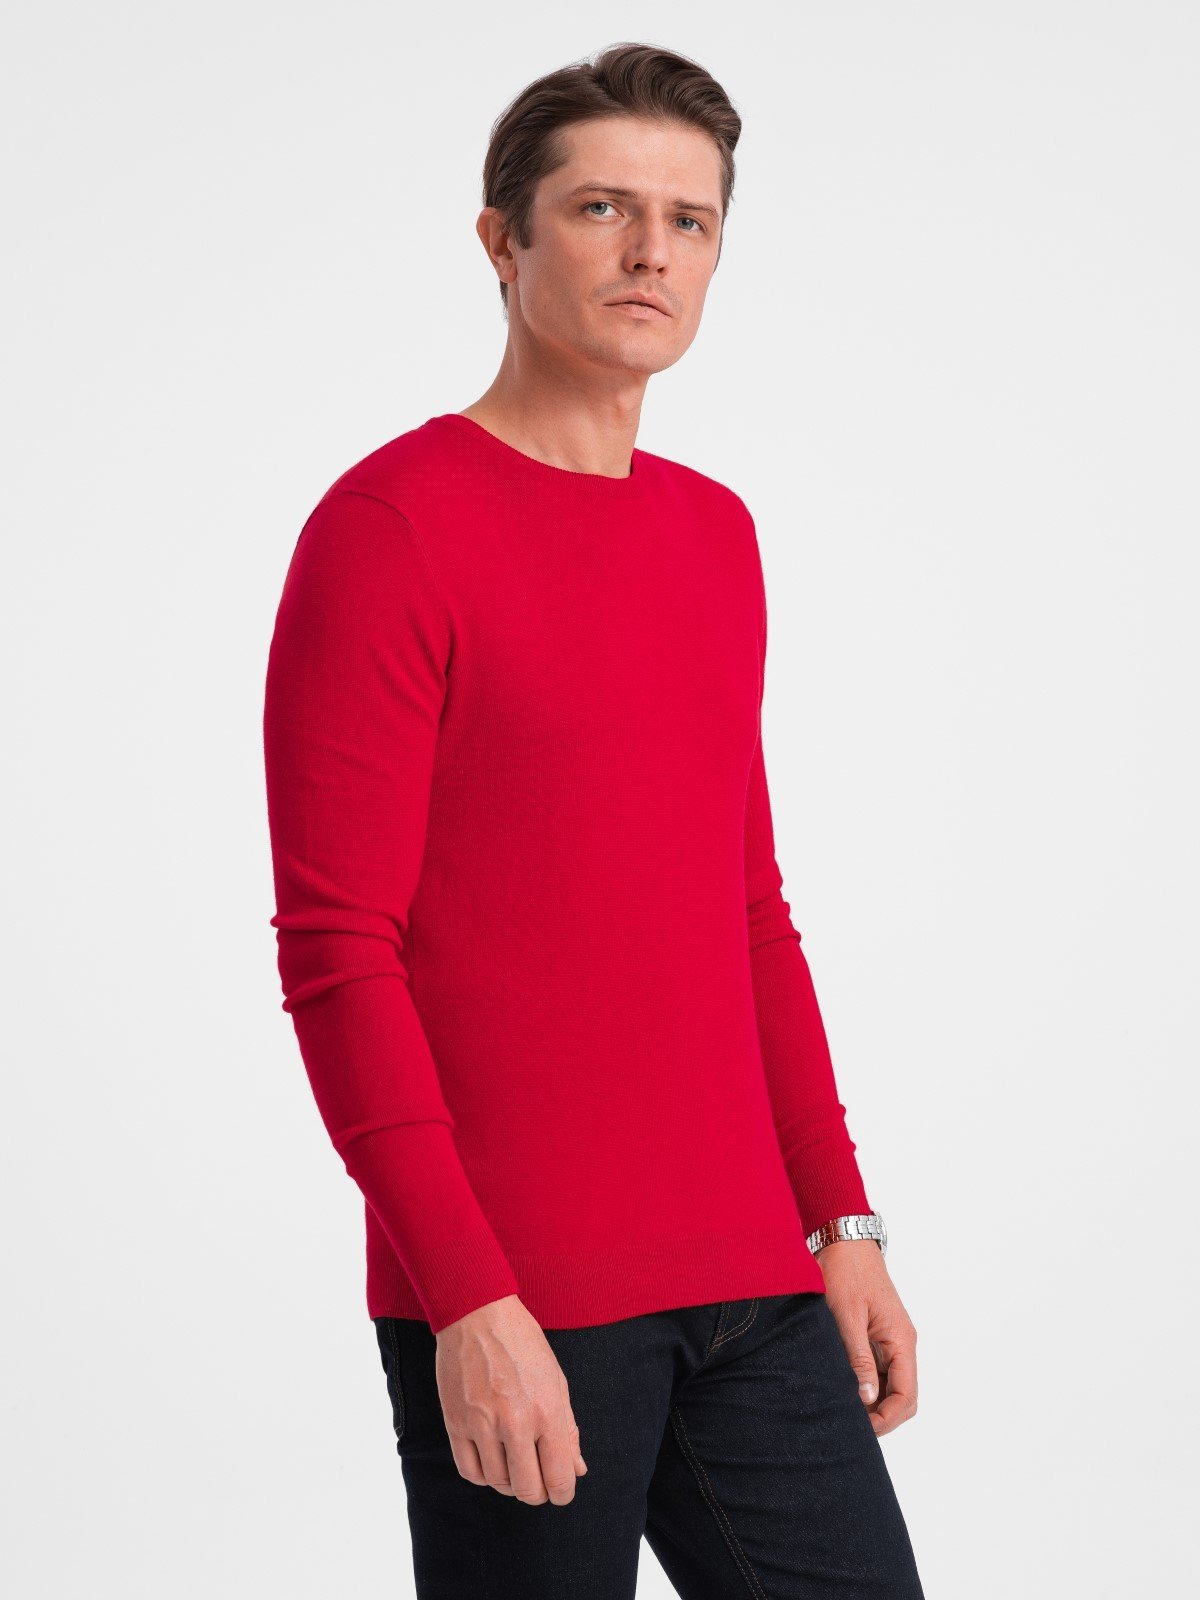 Classic men's sweater with round neckline - red V5 OM-SWBS V5 OM-SWBS - 0106